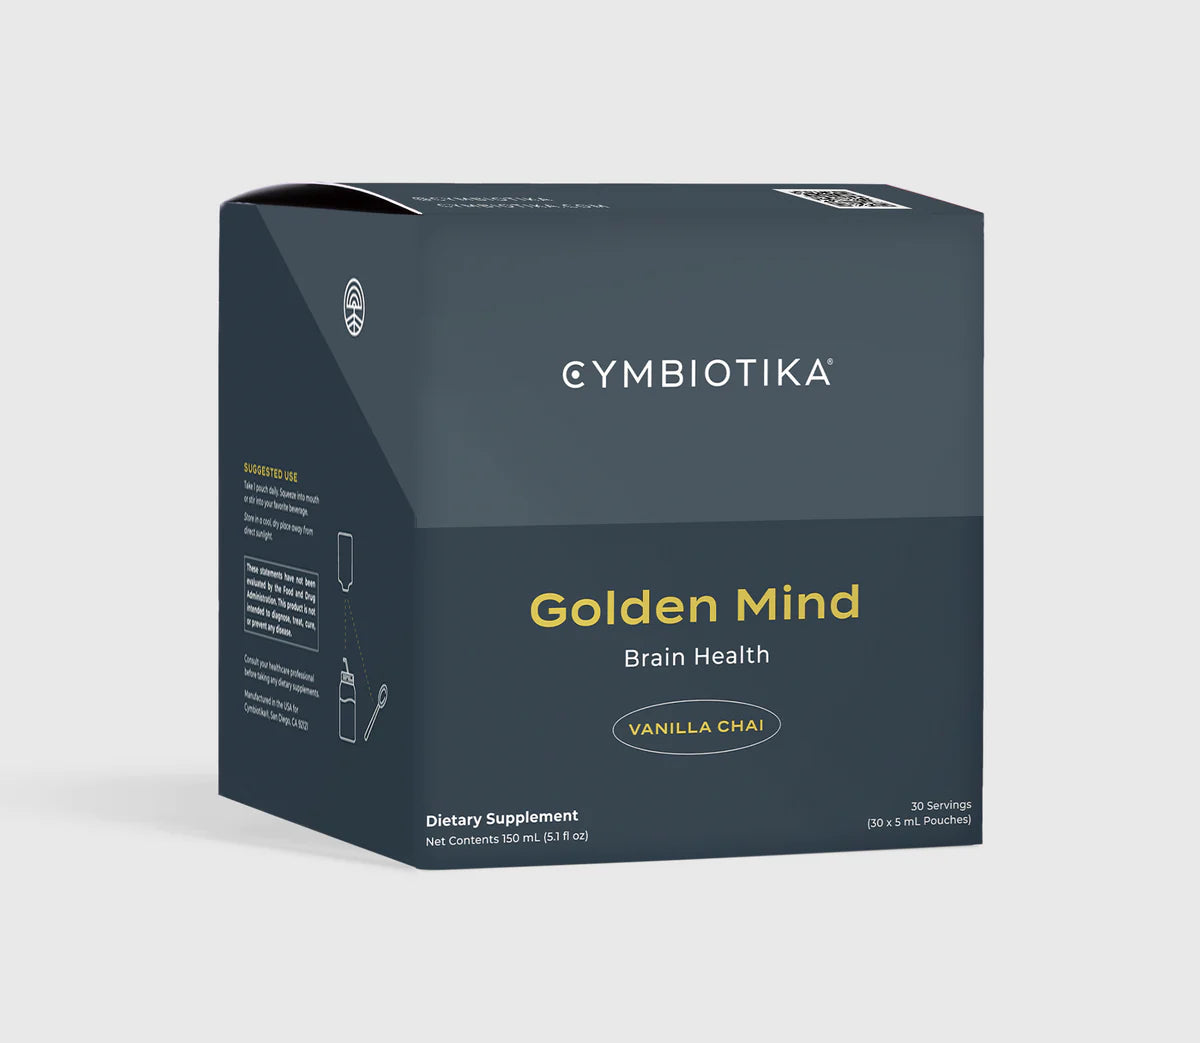 Golden Mind by Cymbiotika